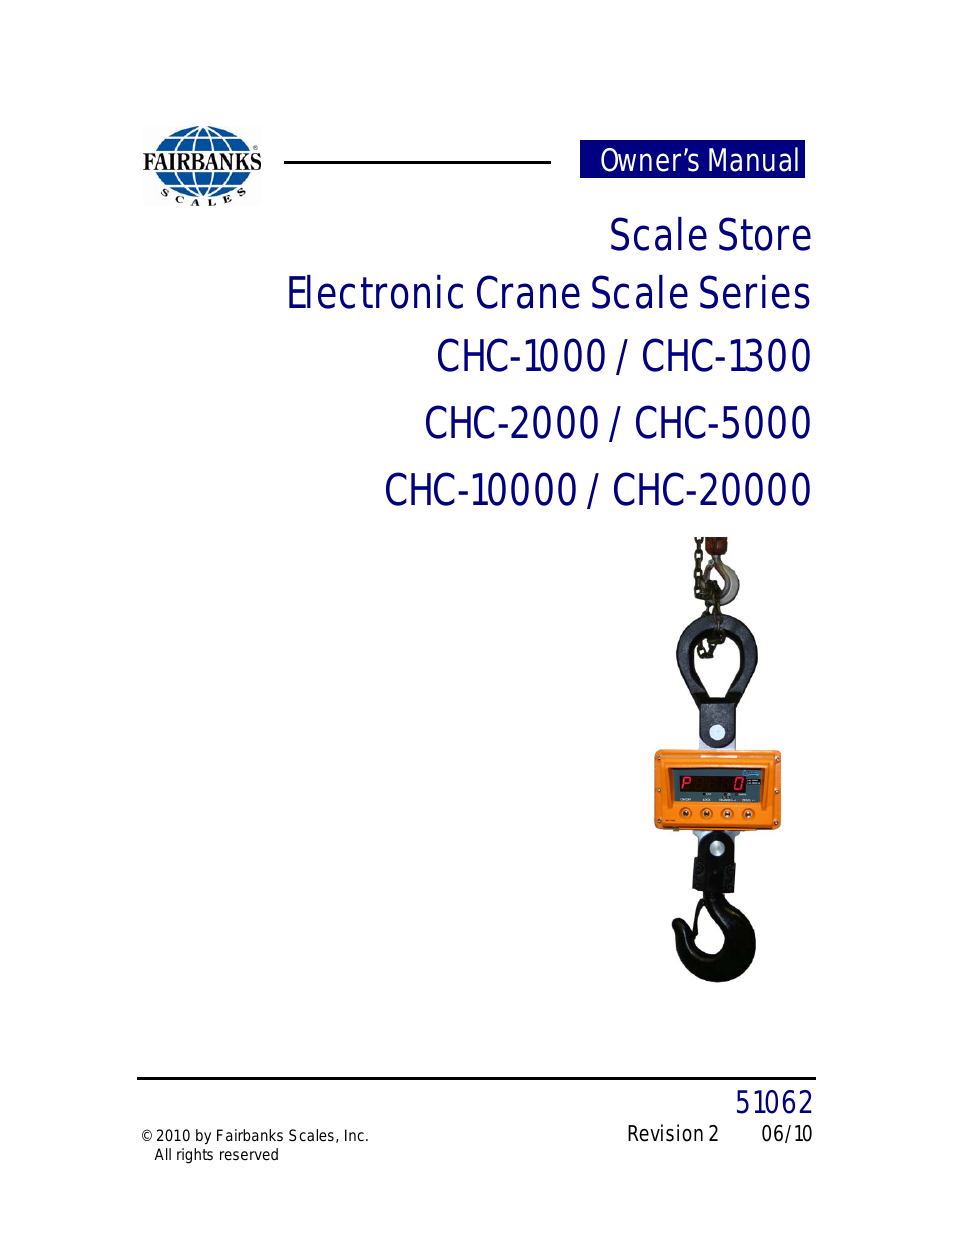 CHC-10000 / CHC-20000 Scale Store